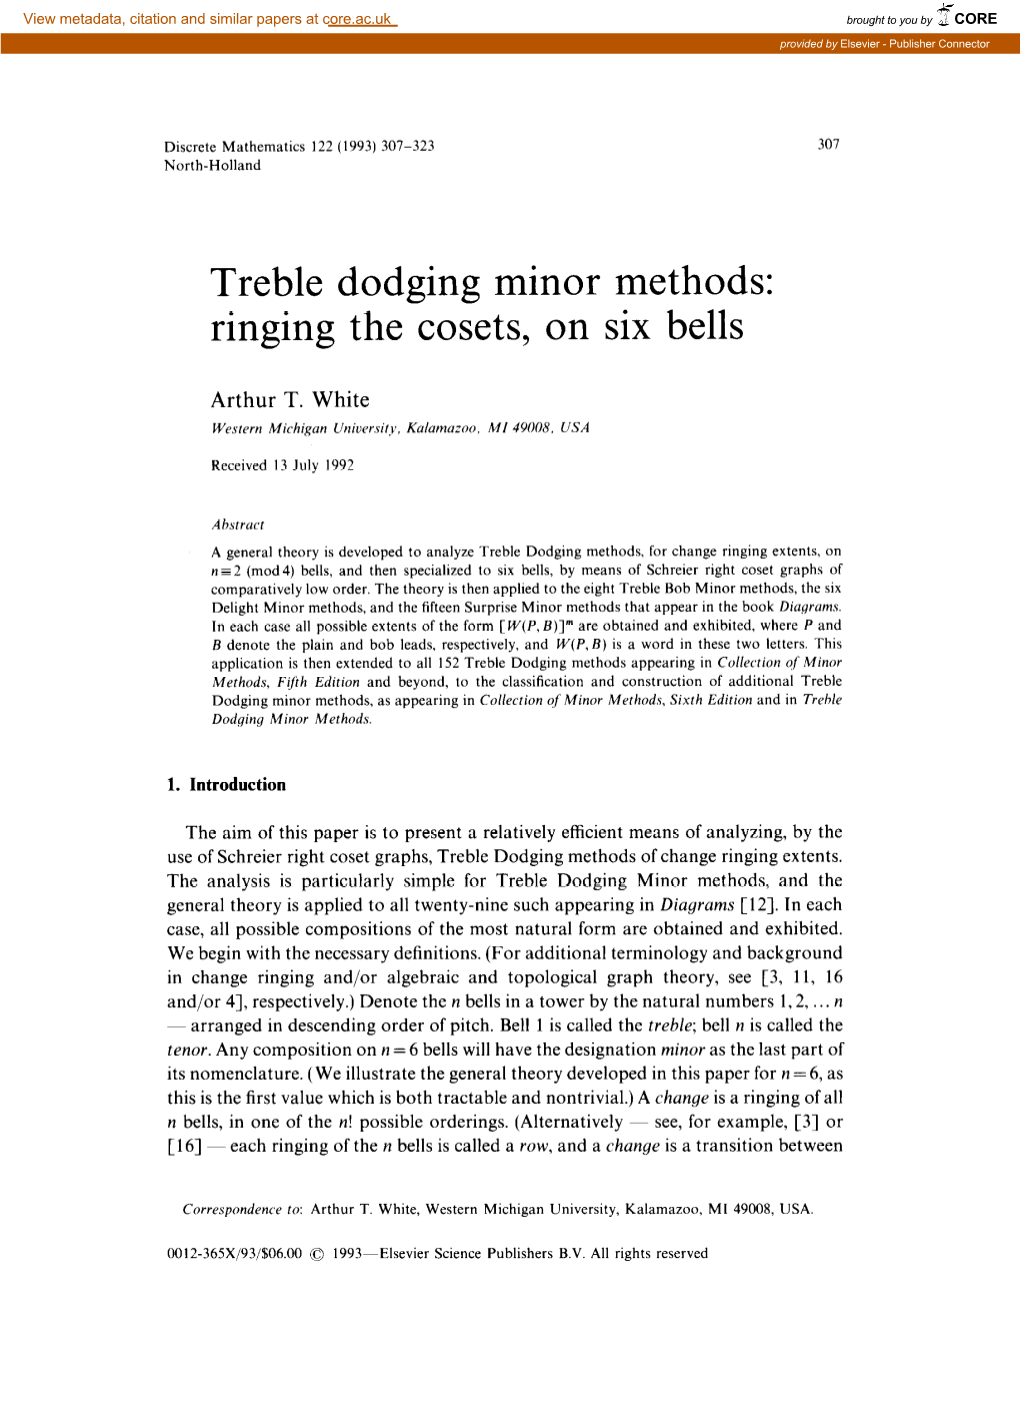 Treble Dodging Minor Methods: Ringing the Cosets, on Six Bells